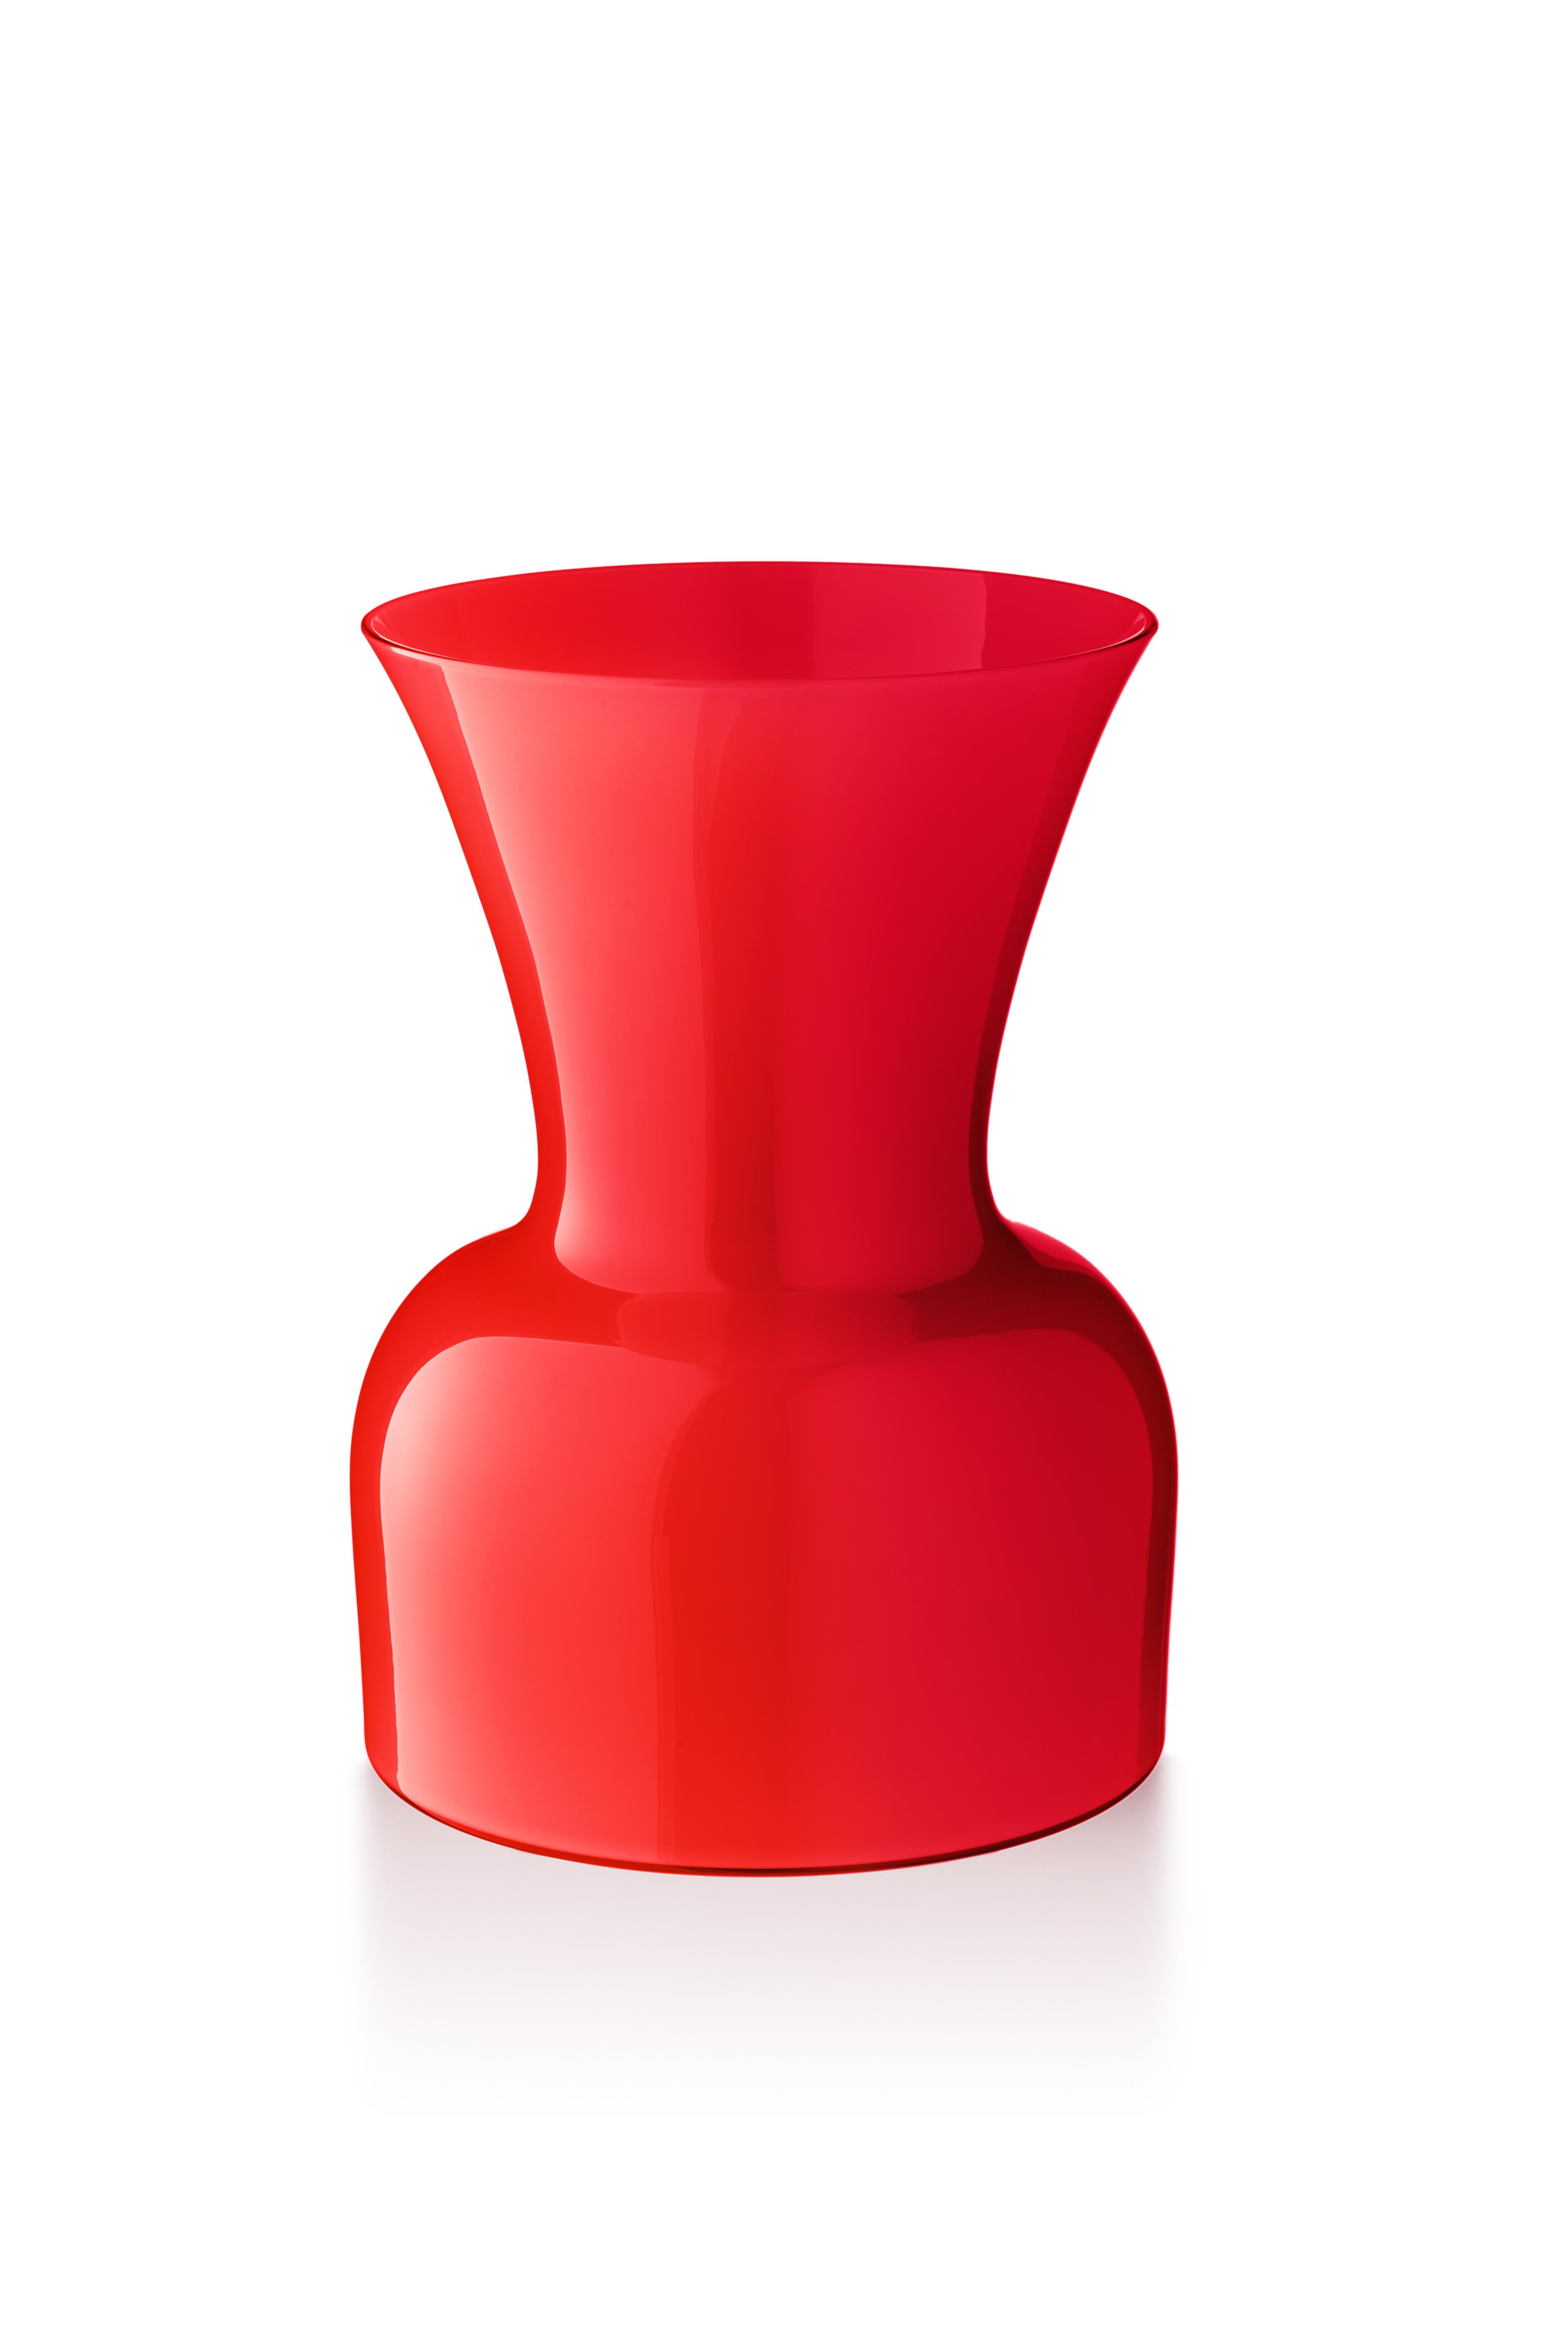 Orange (10039) Large Profili Daisy Murano Glass Vase by Anna Gili